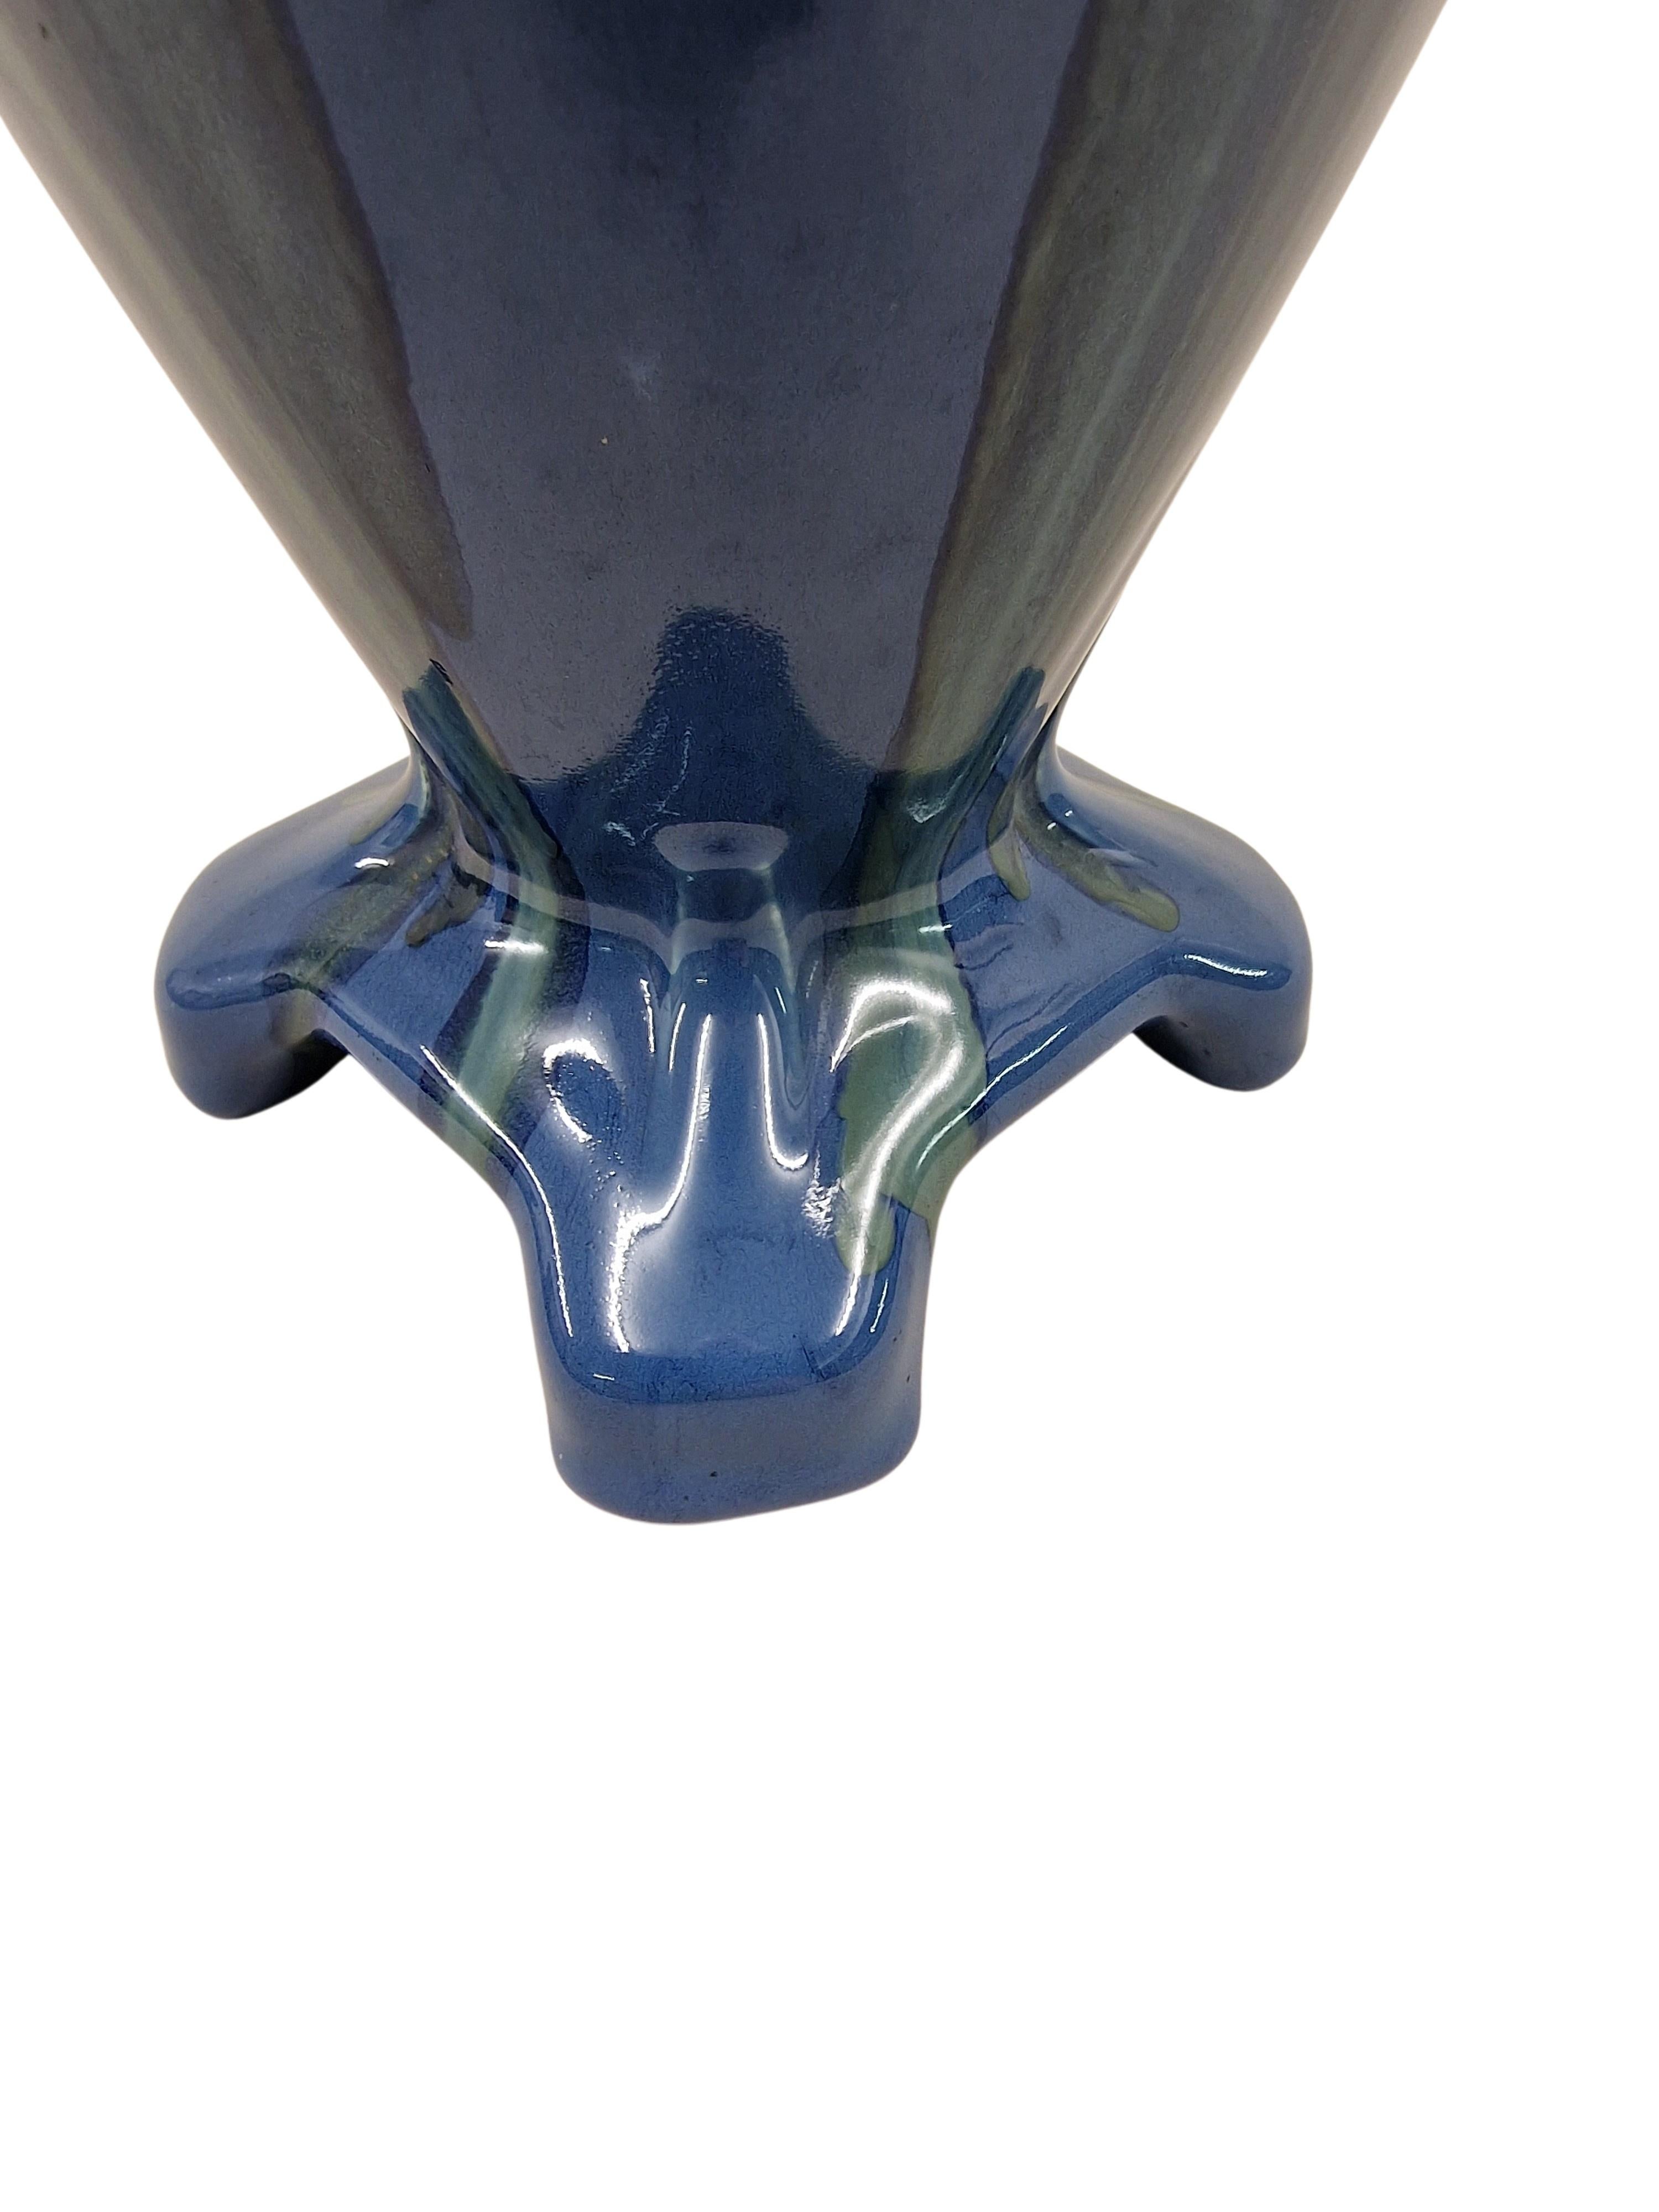 greek vase 7328